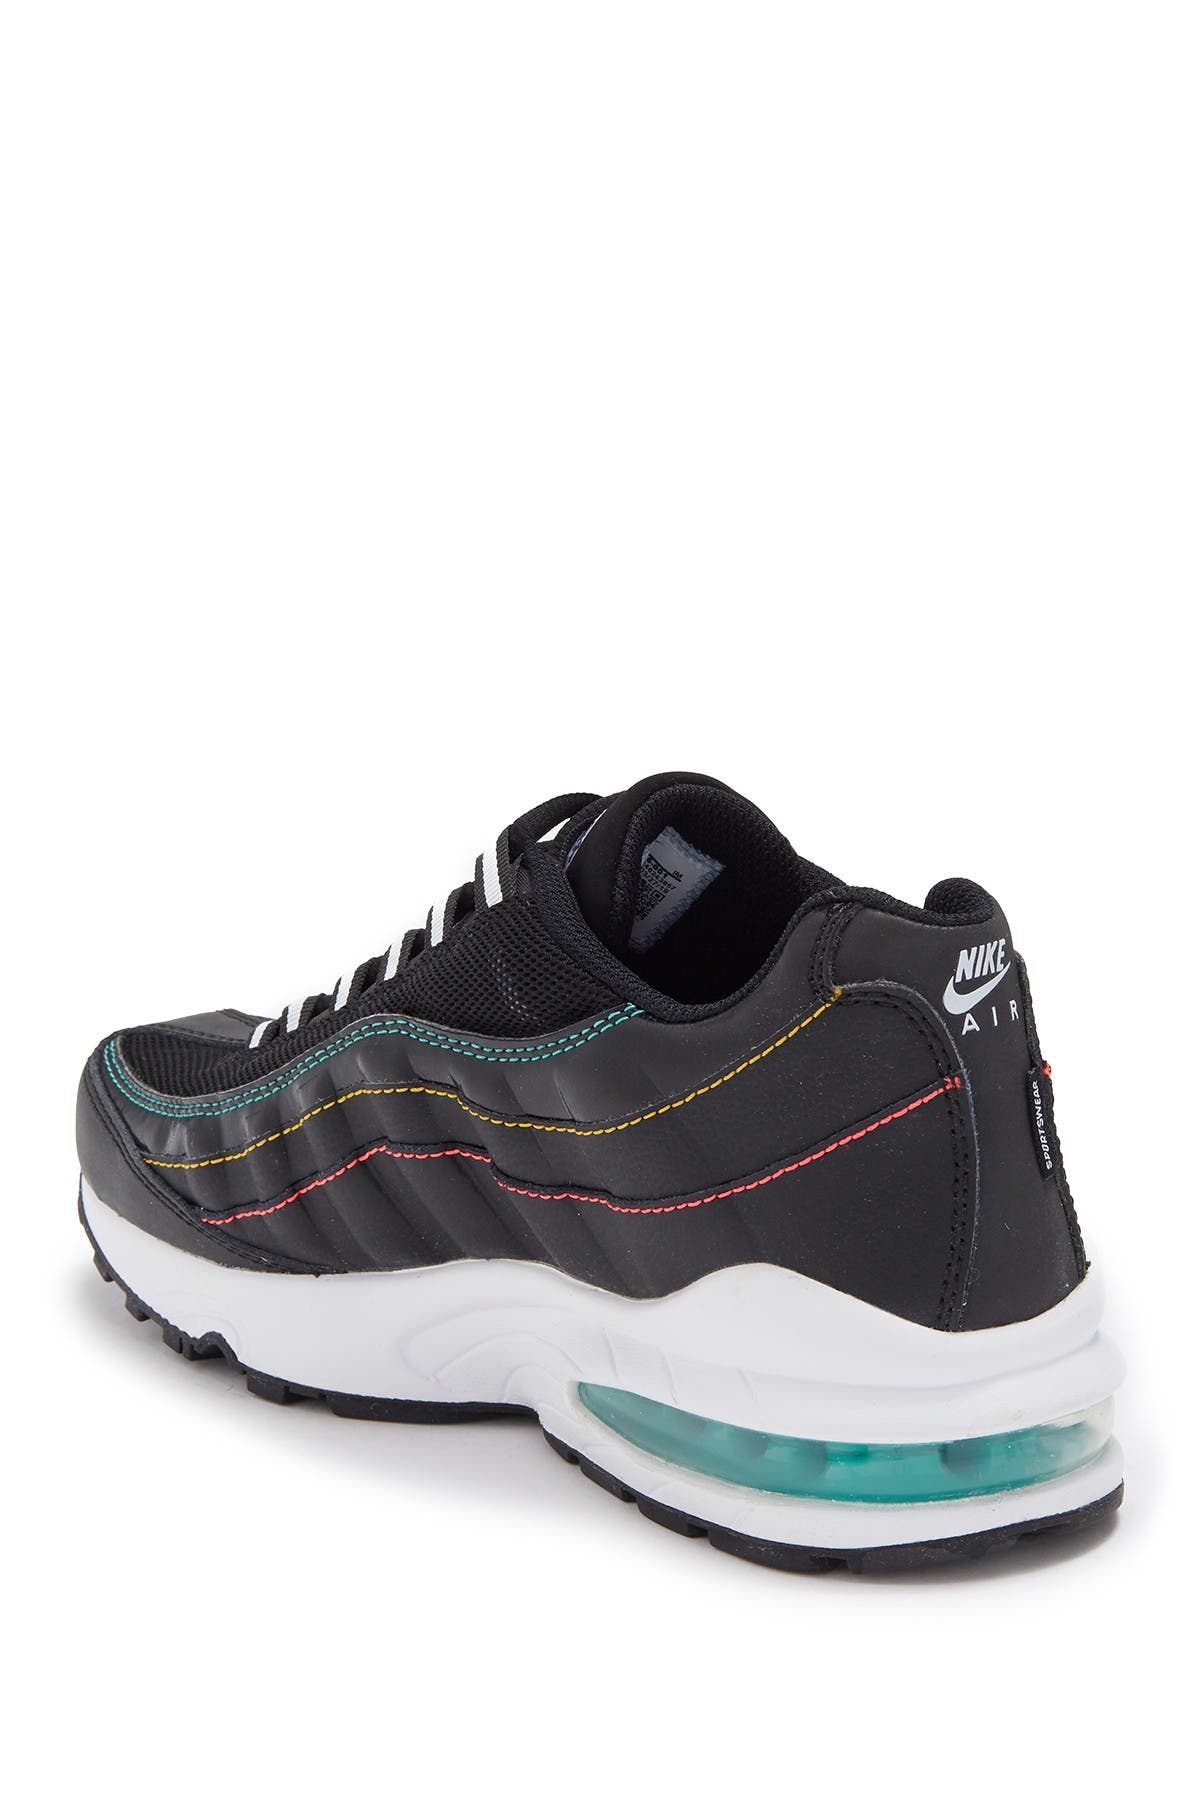 Nike | Air Max 95 Game Change Sneaker 